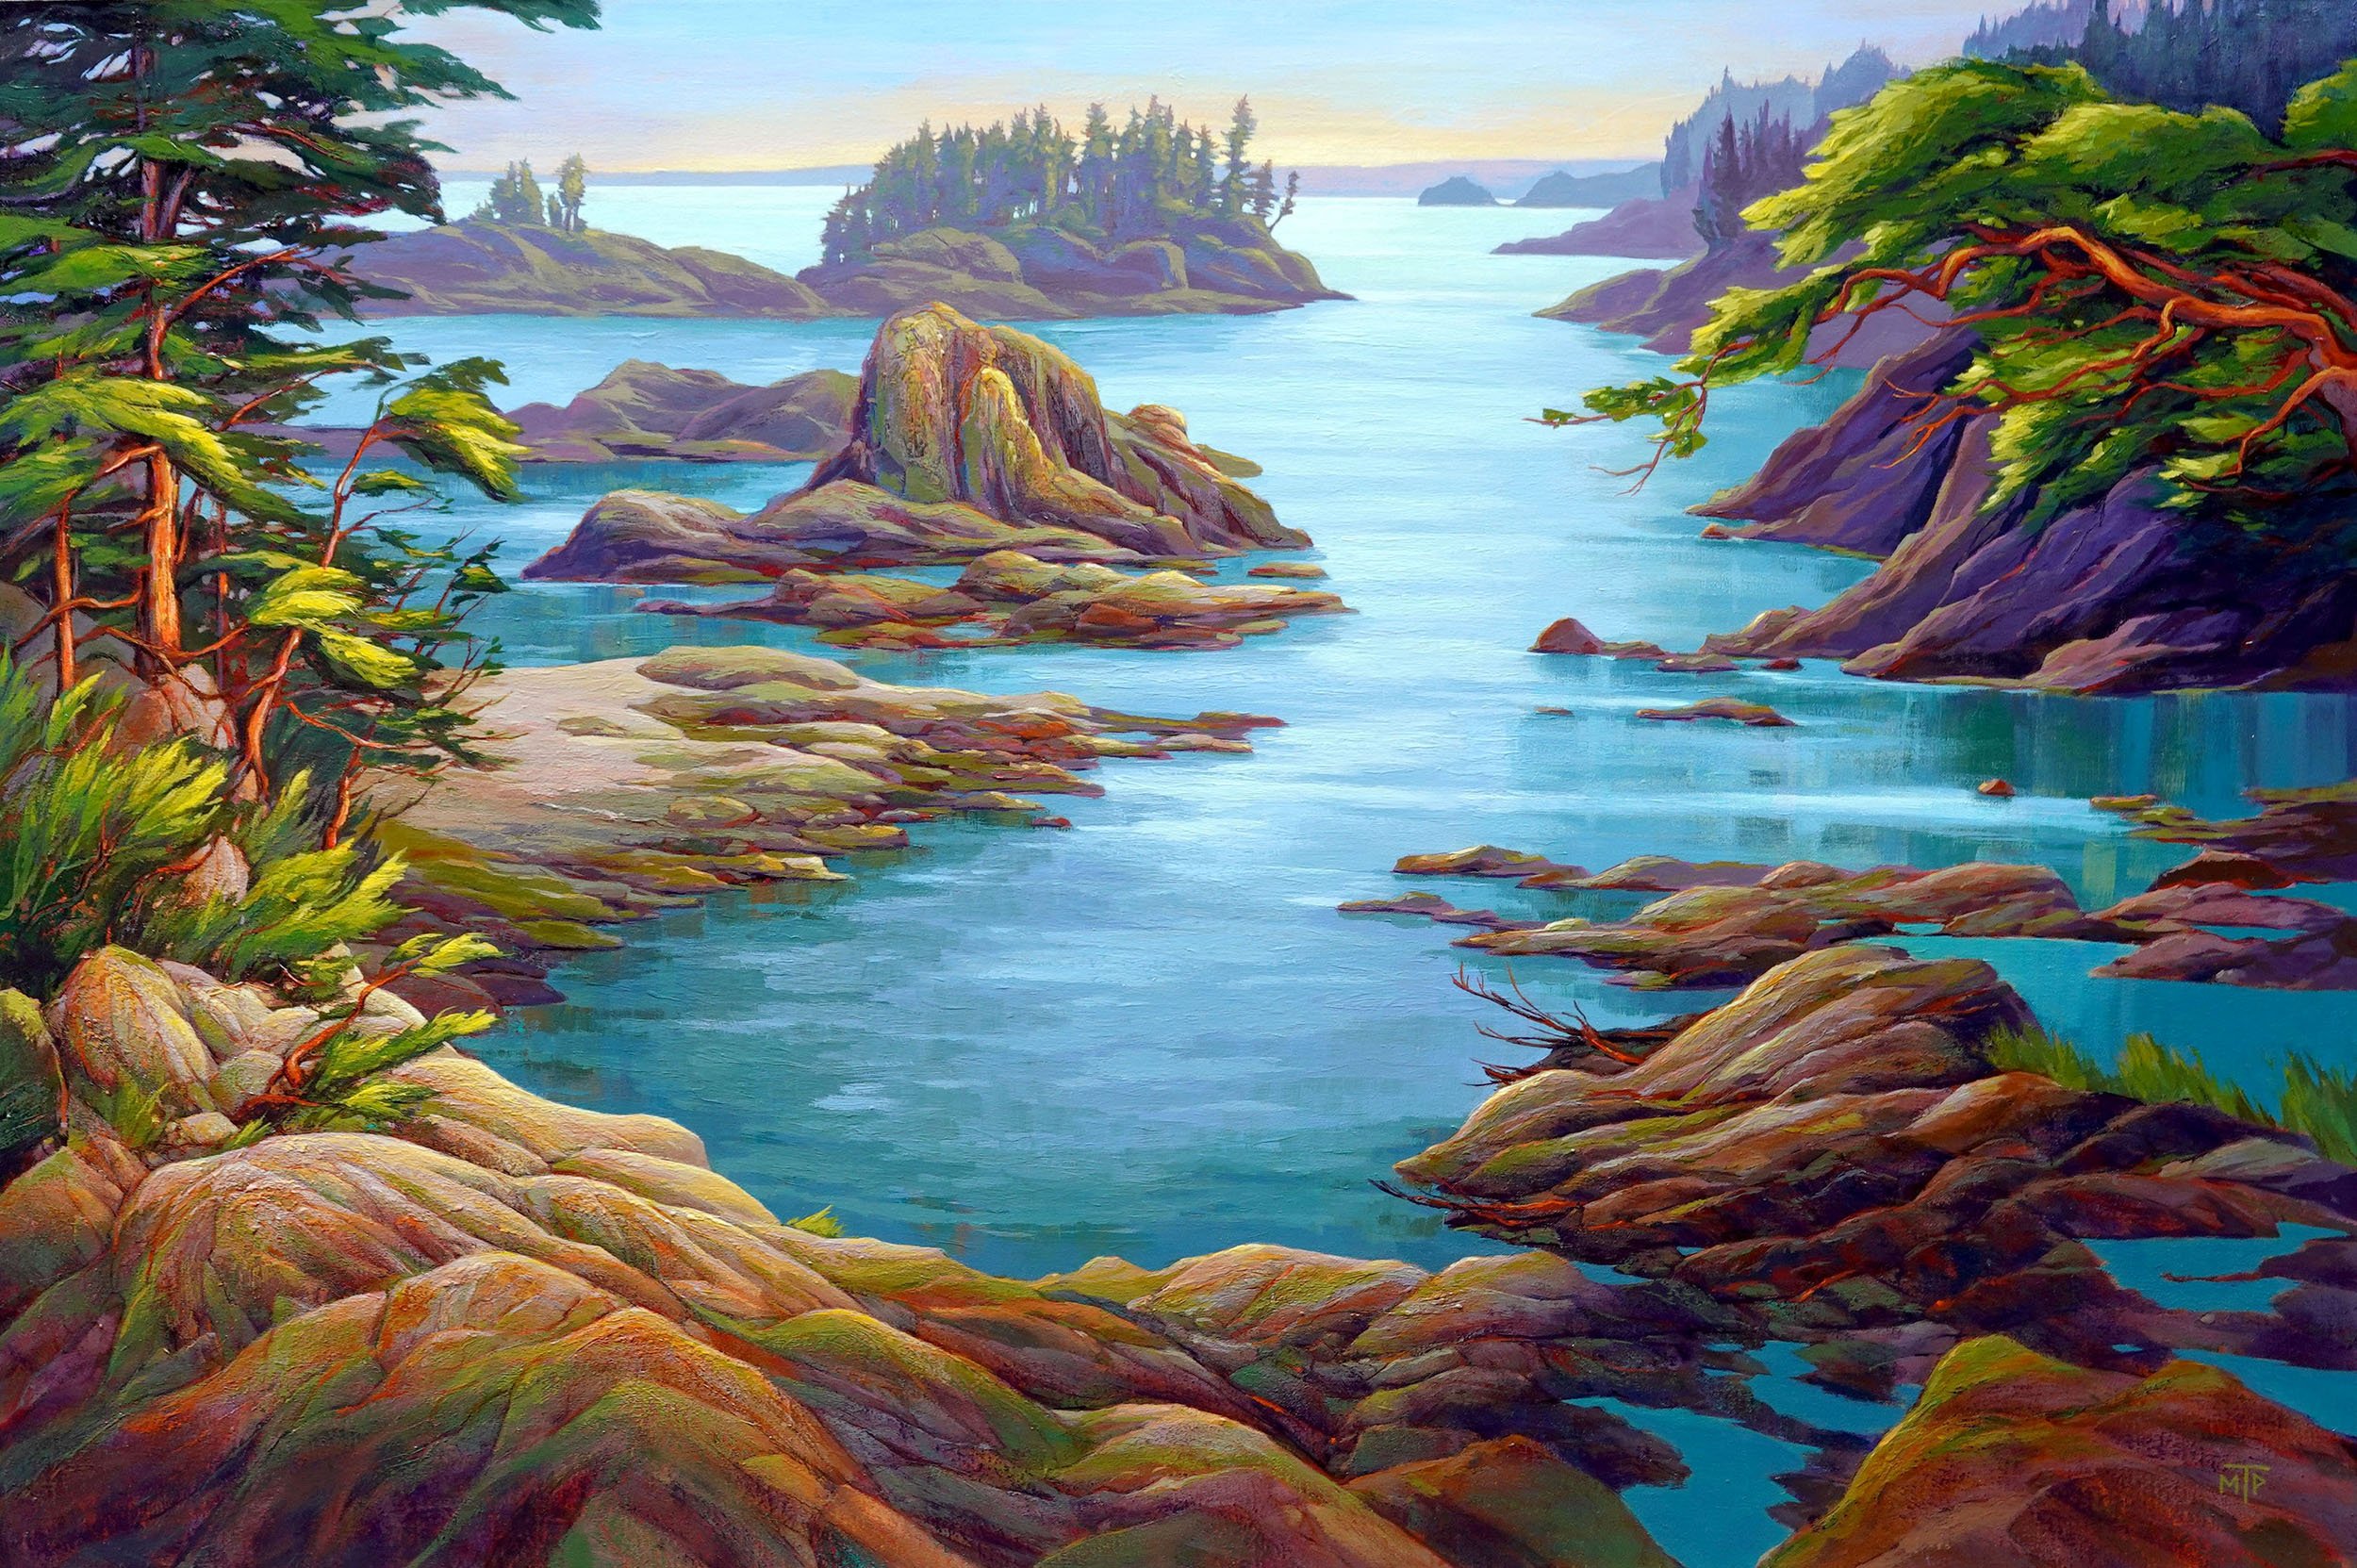  Ucluelet Coastline   Acrylic on canvas, 40x60 inches, $6,500, Lando Gallery, Edmonton, AB (780 990 1161 / mail@landogallery.com)  